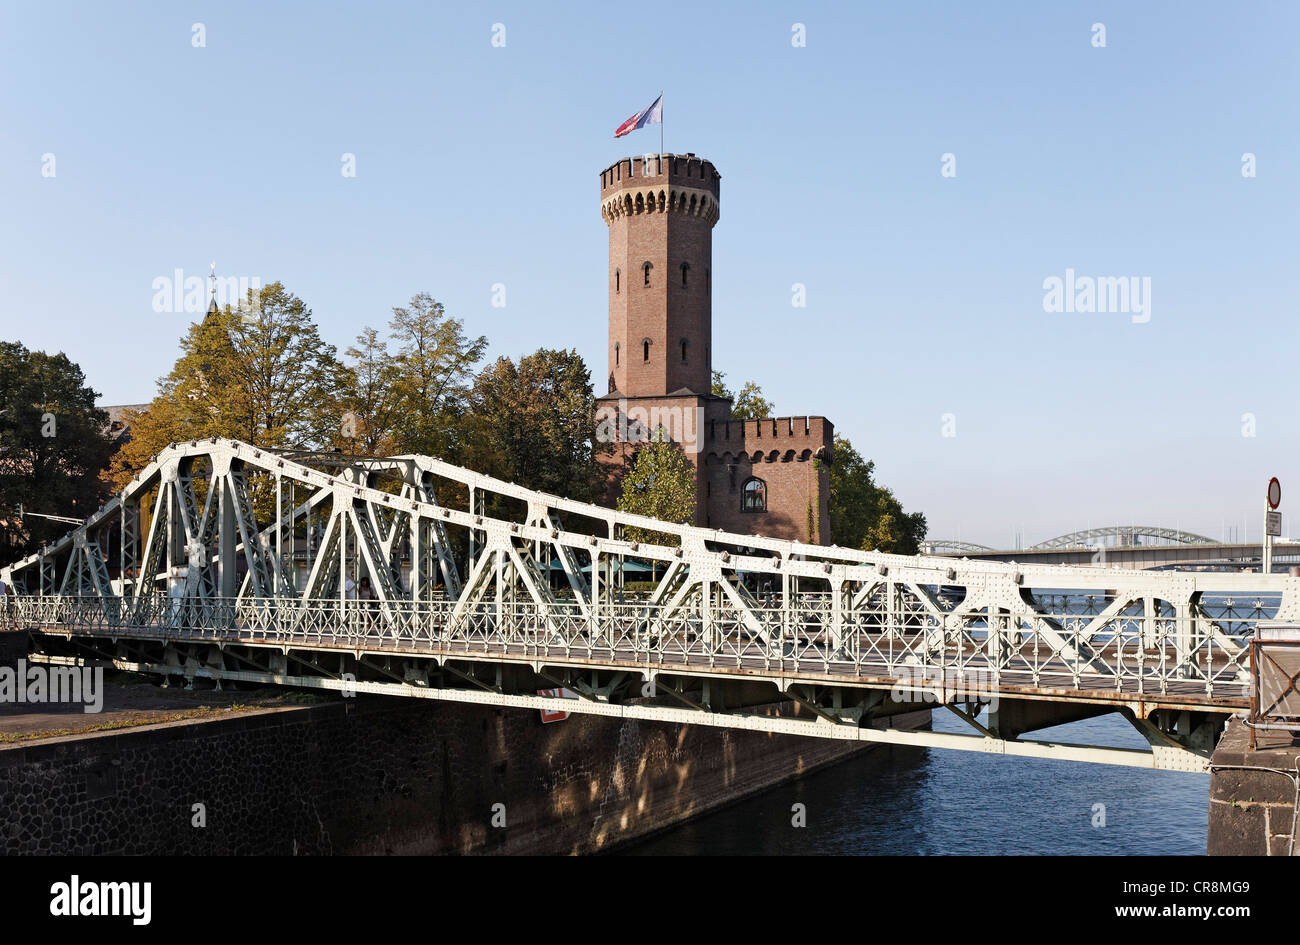 Malakoff tower and historic swing bridge, entrance to the Rheinauhafen, Cologne, North Rhine-Westphalia, Germany, Europe Stock Photo